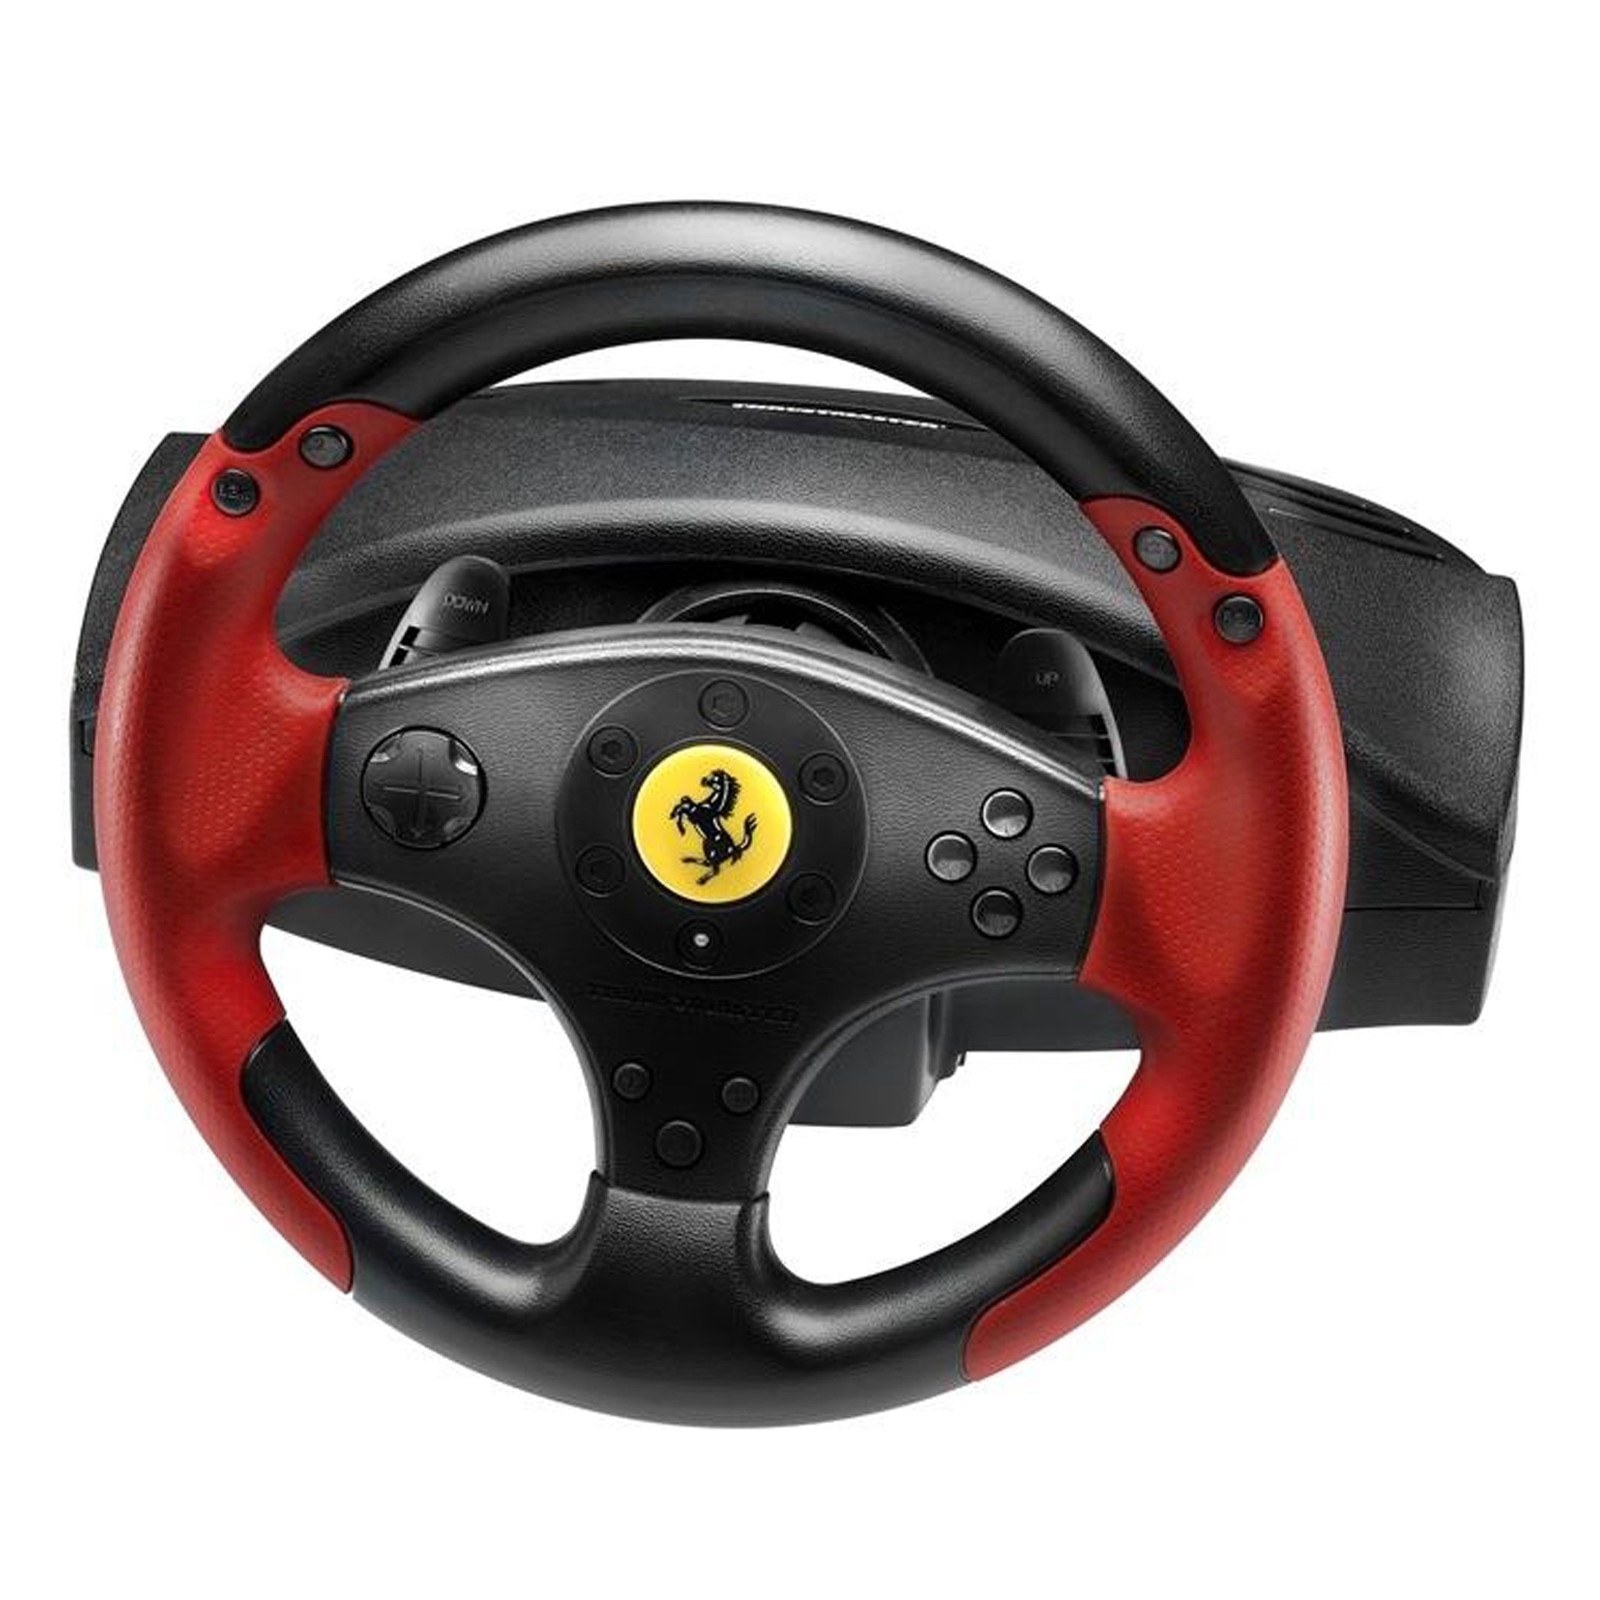 Драйвера thrustmaster ferrari. Thrustmaster Ferrari Racing Wheel. Руль Thrustmaster Ferrari Racing Wheel Red Legend Edition. Игровой руль Thrustmaster Ferrari. Руль Феррари Thrustmaster.